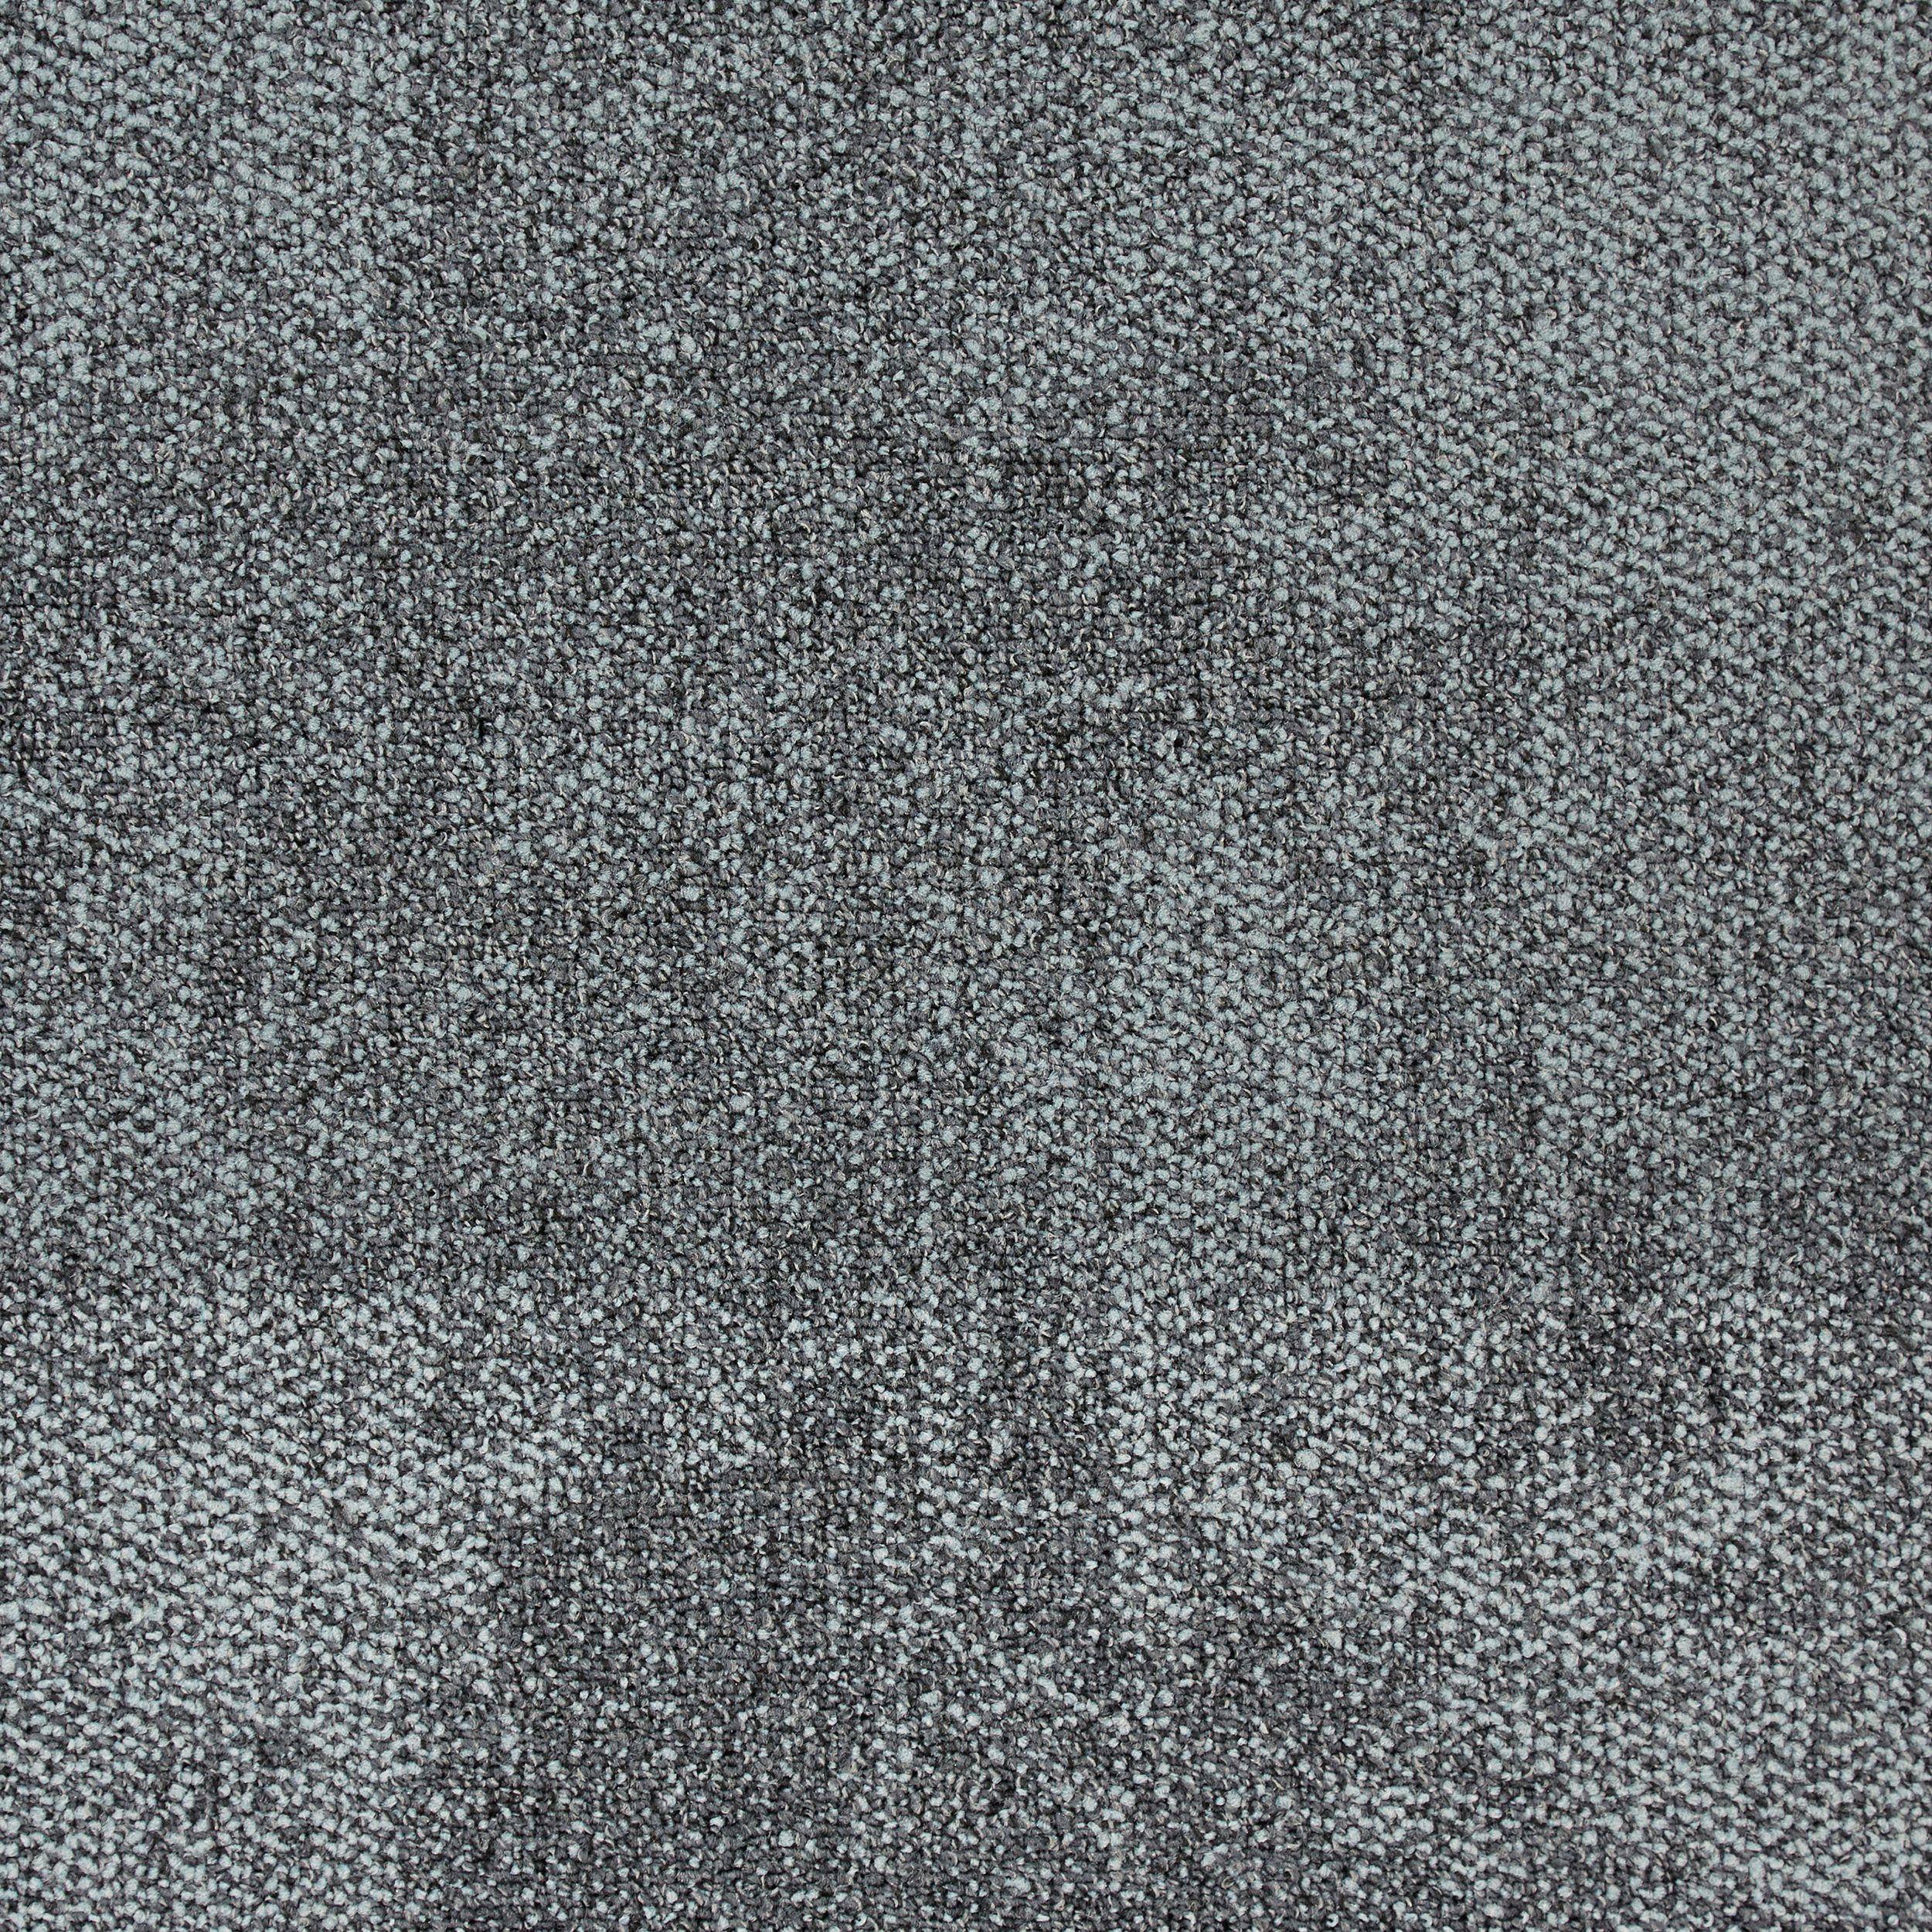 Composure Carpet Tile In Reserved número de imagen 2